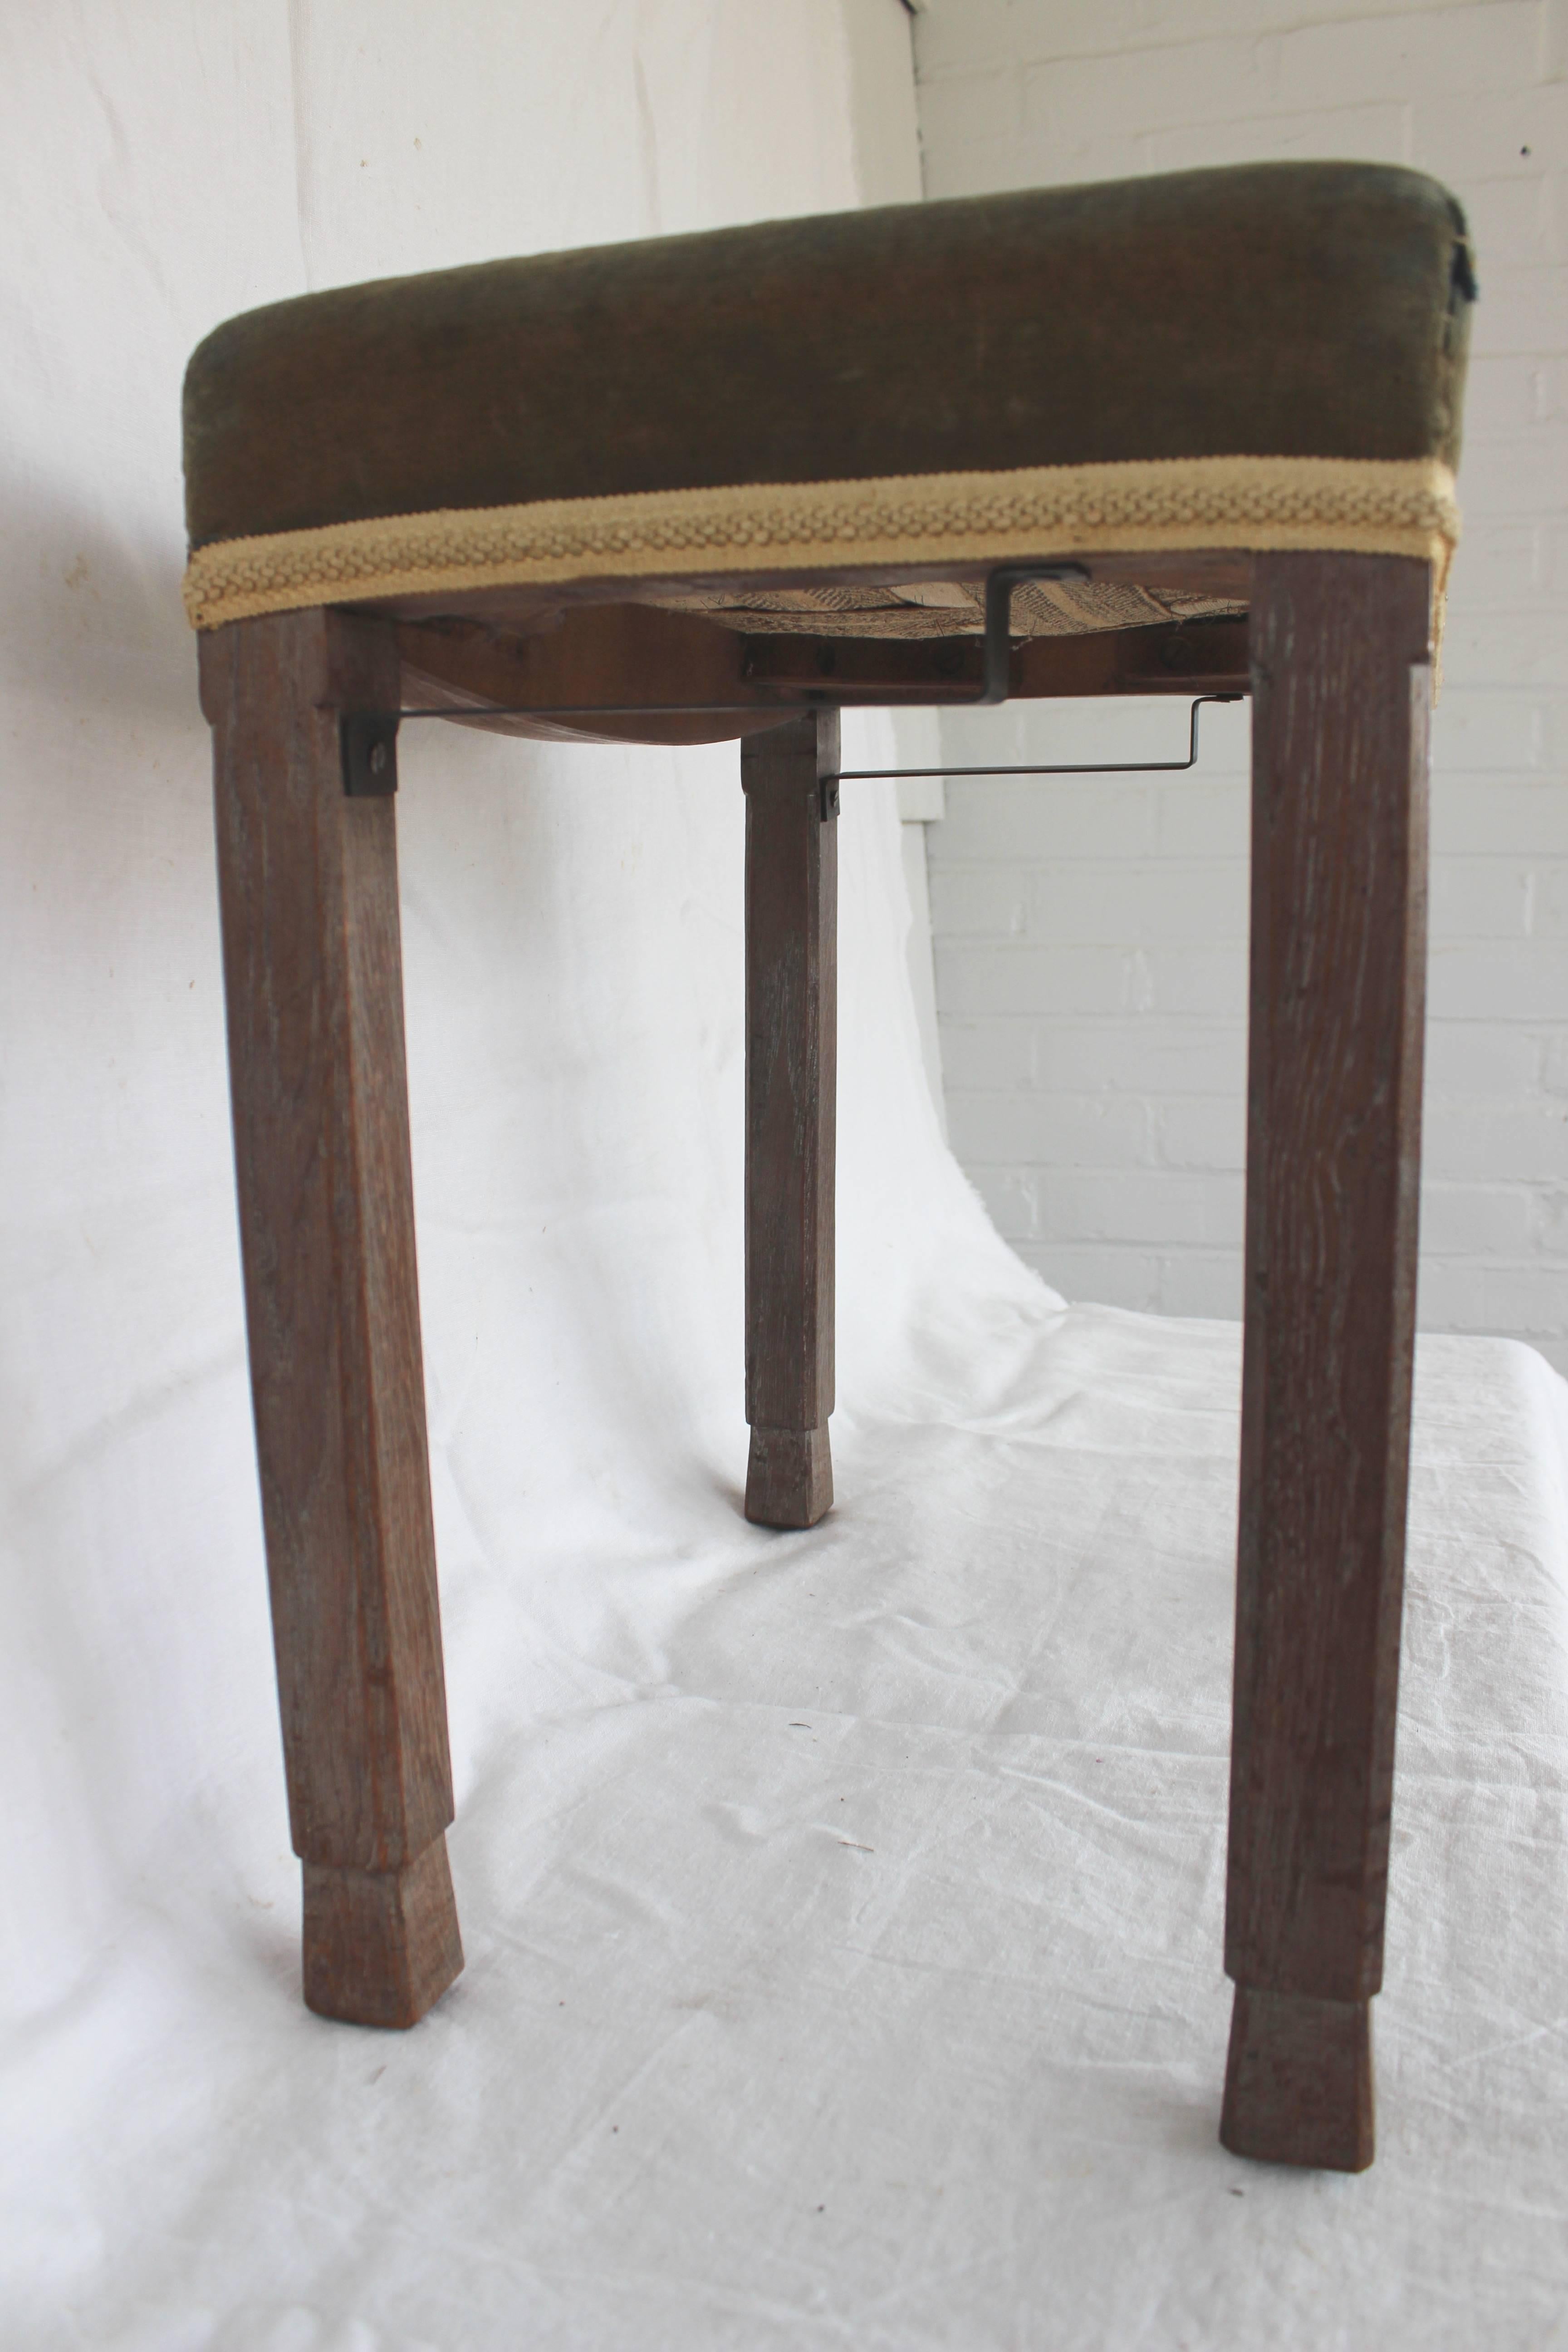 King George VI coronation stool, England, May 12, 1937.

Numbered 164